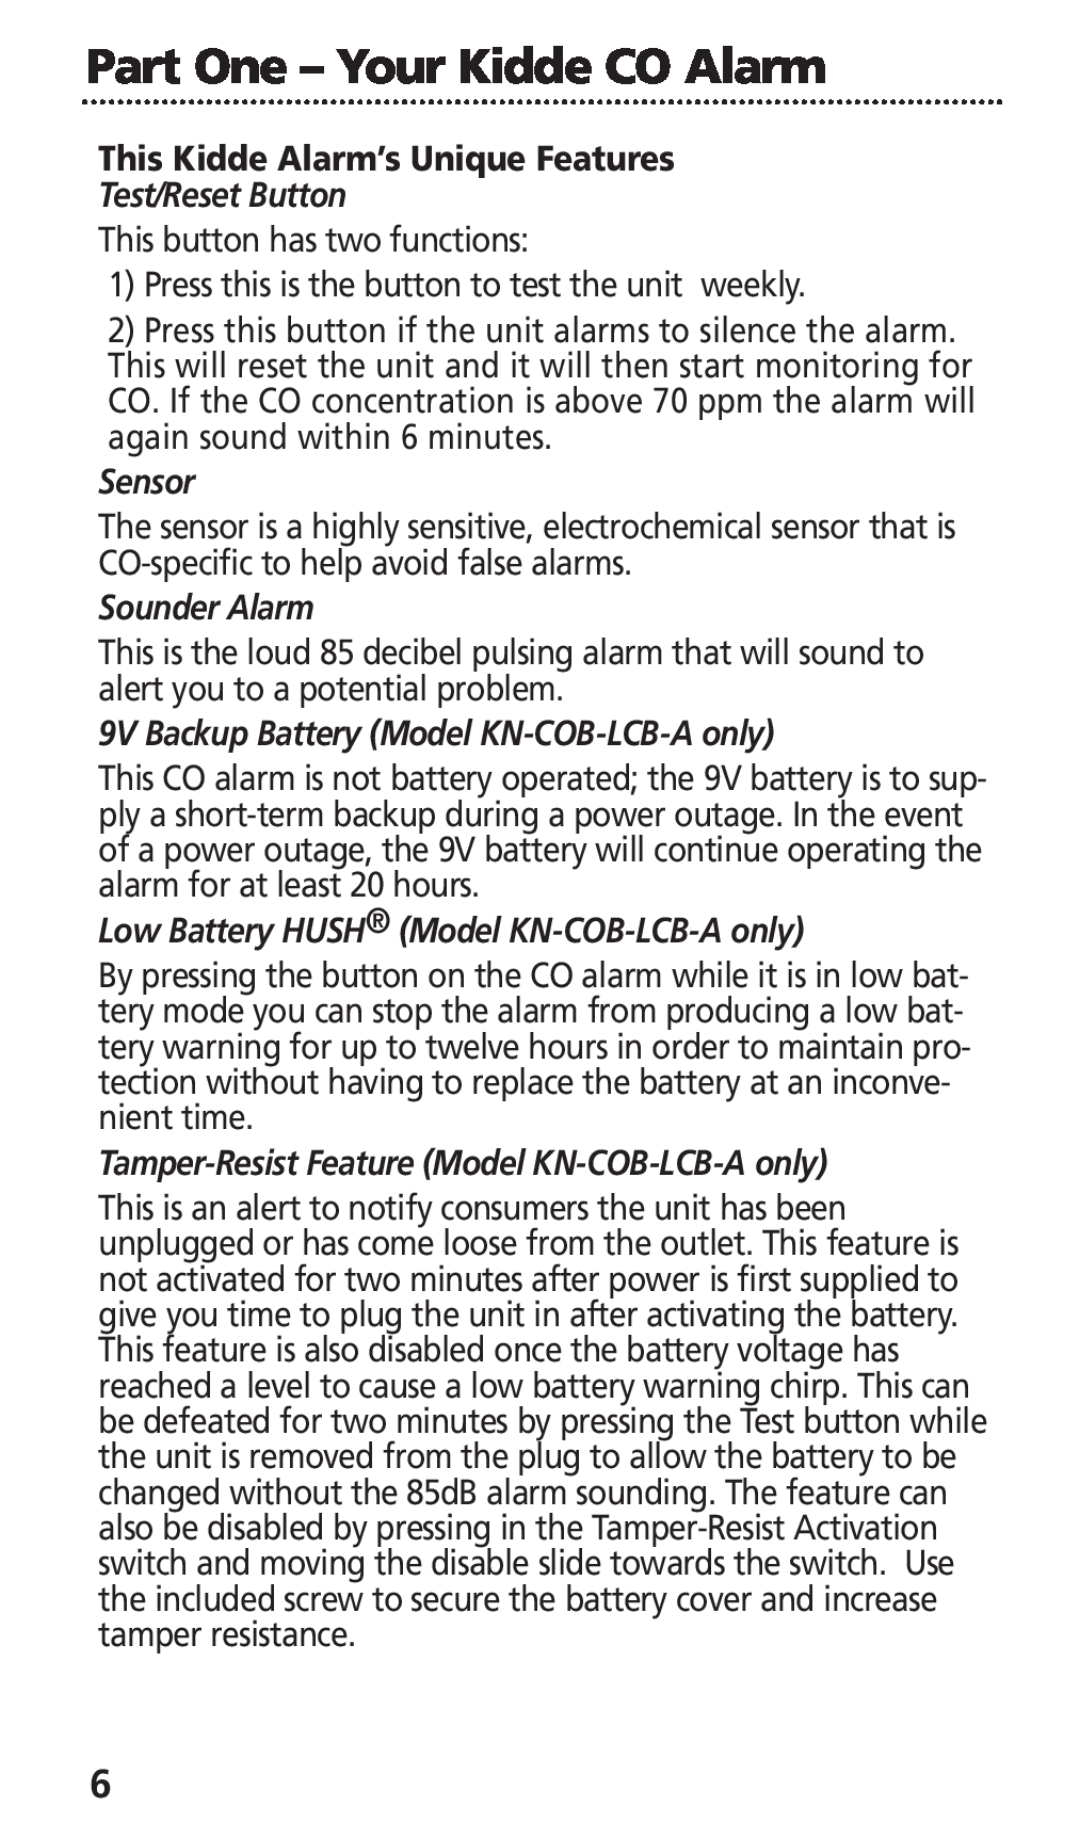 Kidde KN-COB-DP-H, KN-COB-LCB-A manual This Kidde Alarm’s Unique Features, Test/Reset Button, Sensor, Sounder Alarm 